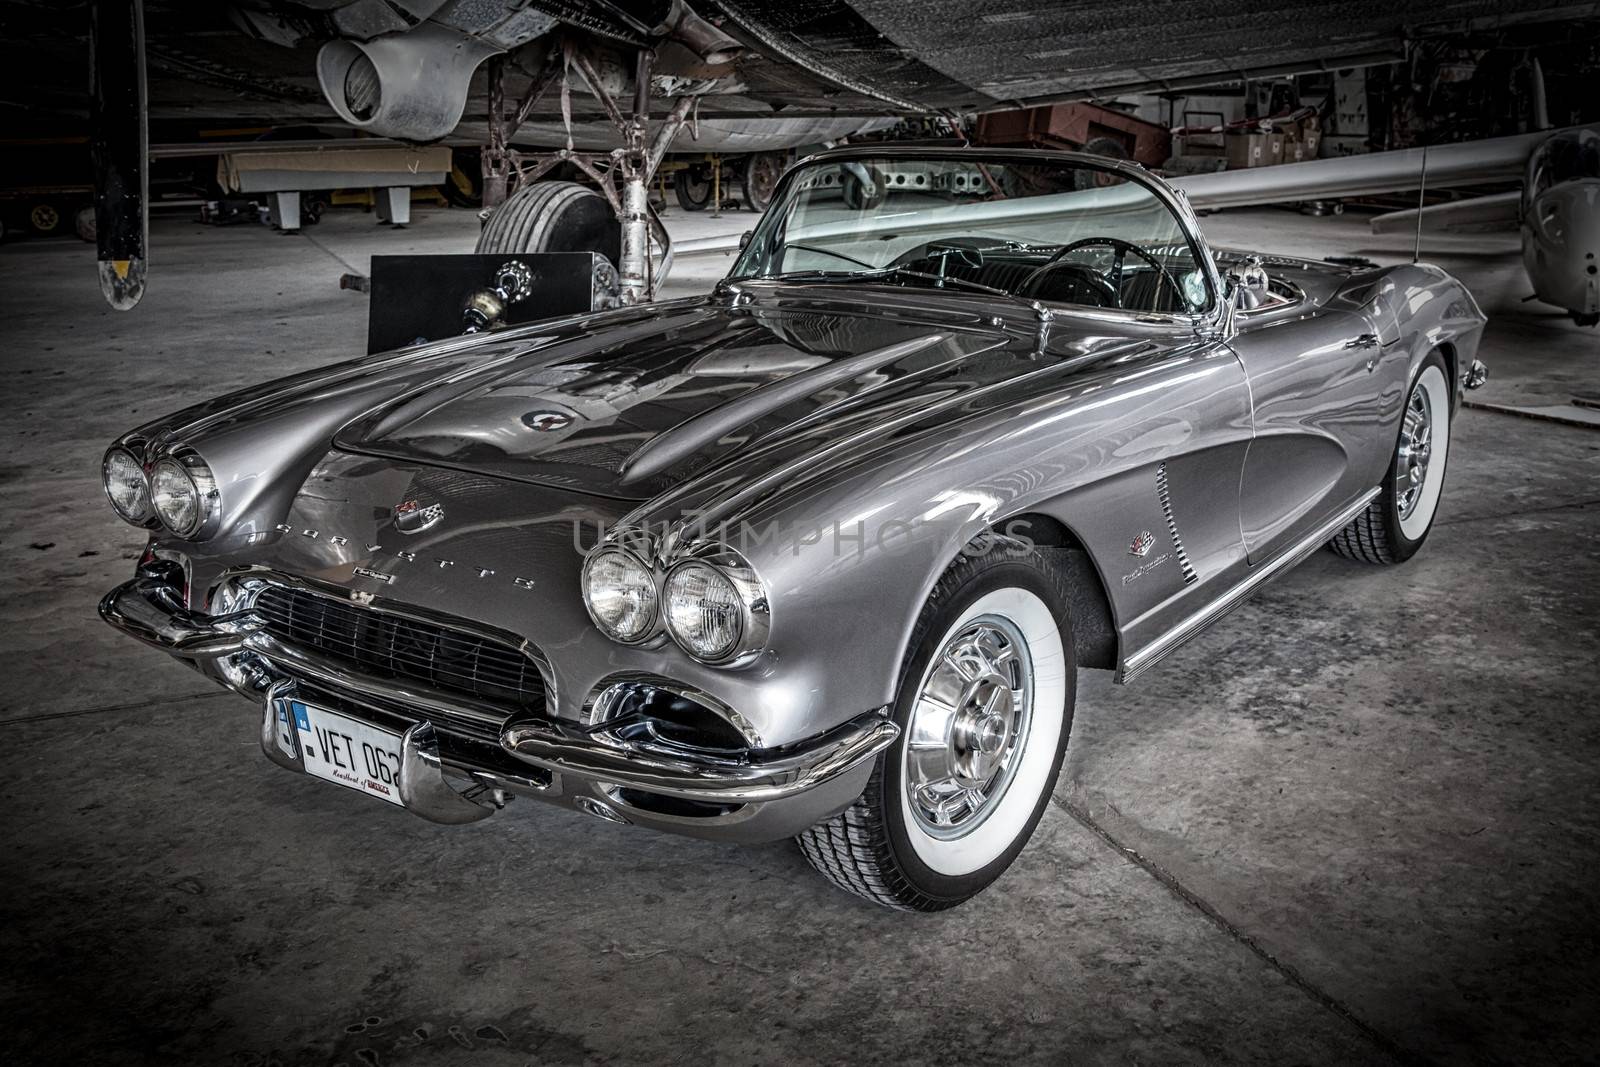 Beautiful American classic Corvette of 1962